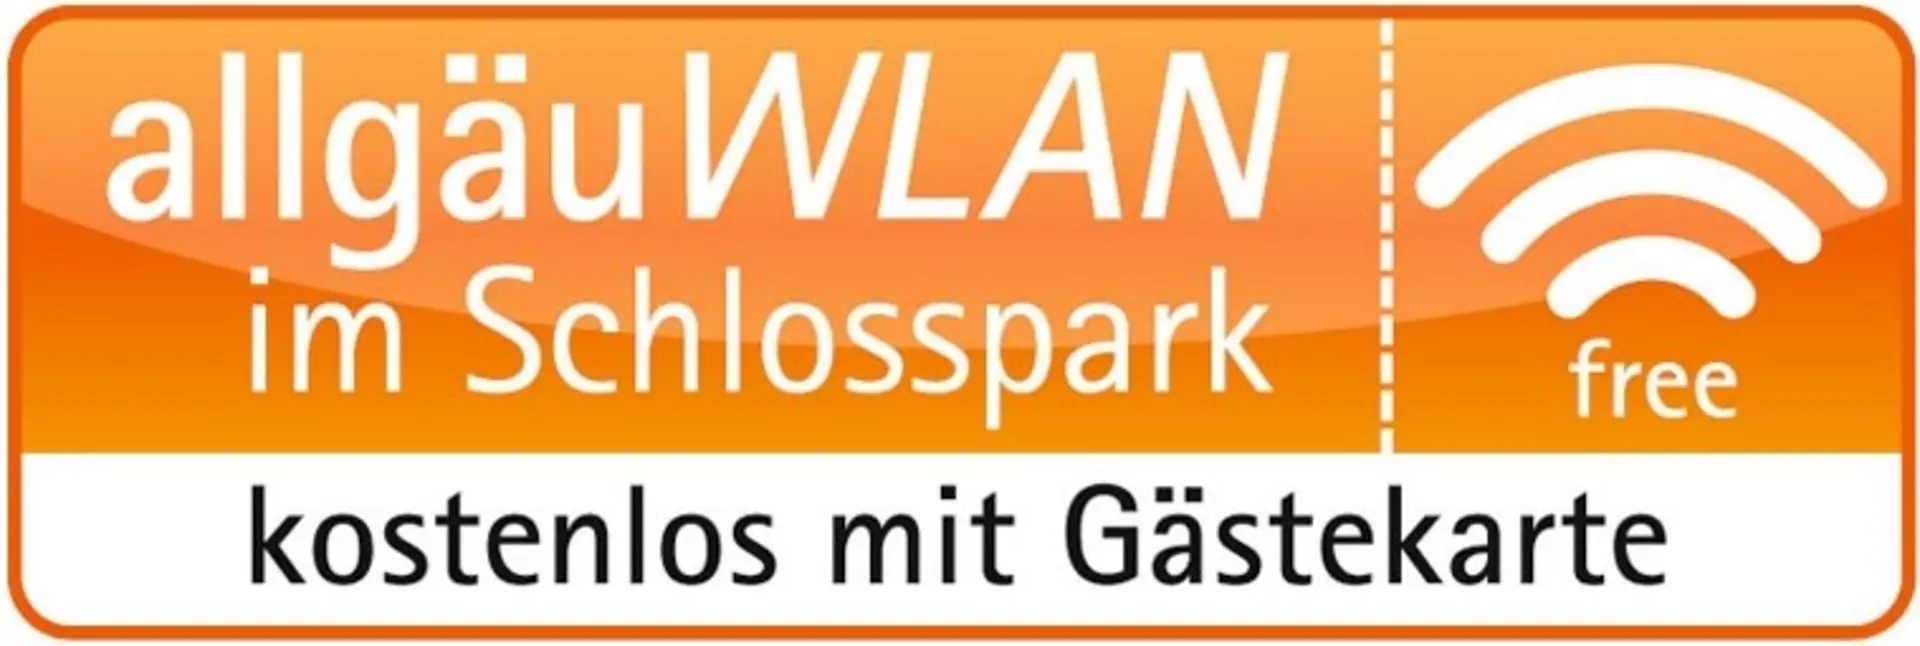 Allgäu WLAN Logo orange